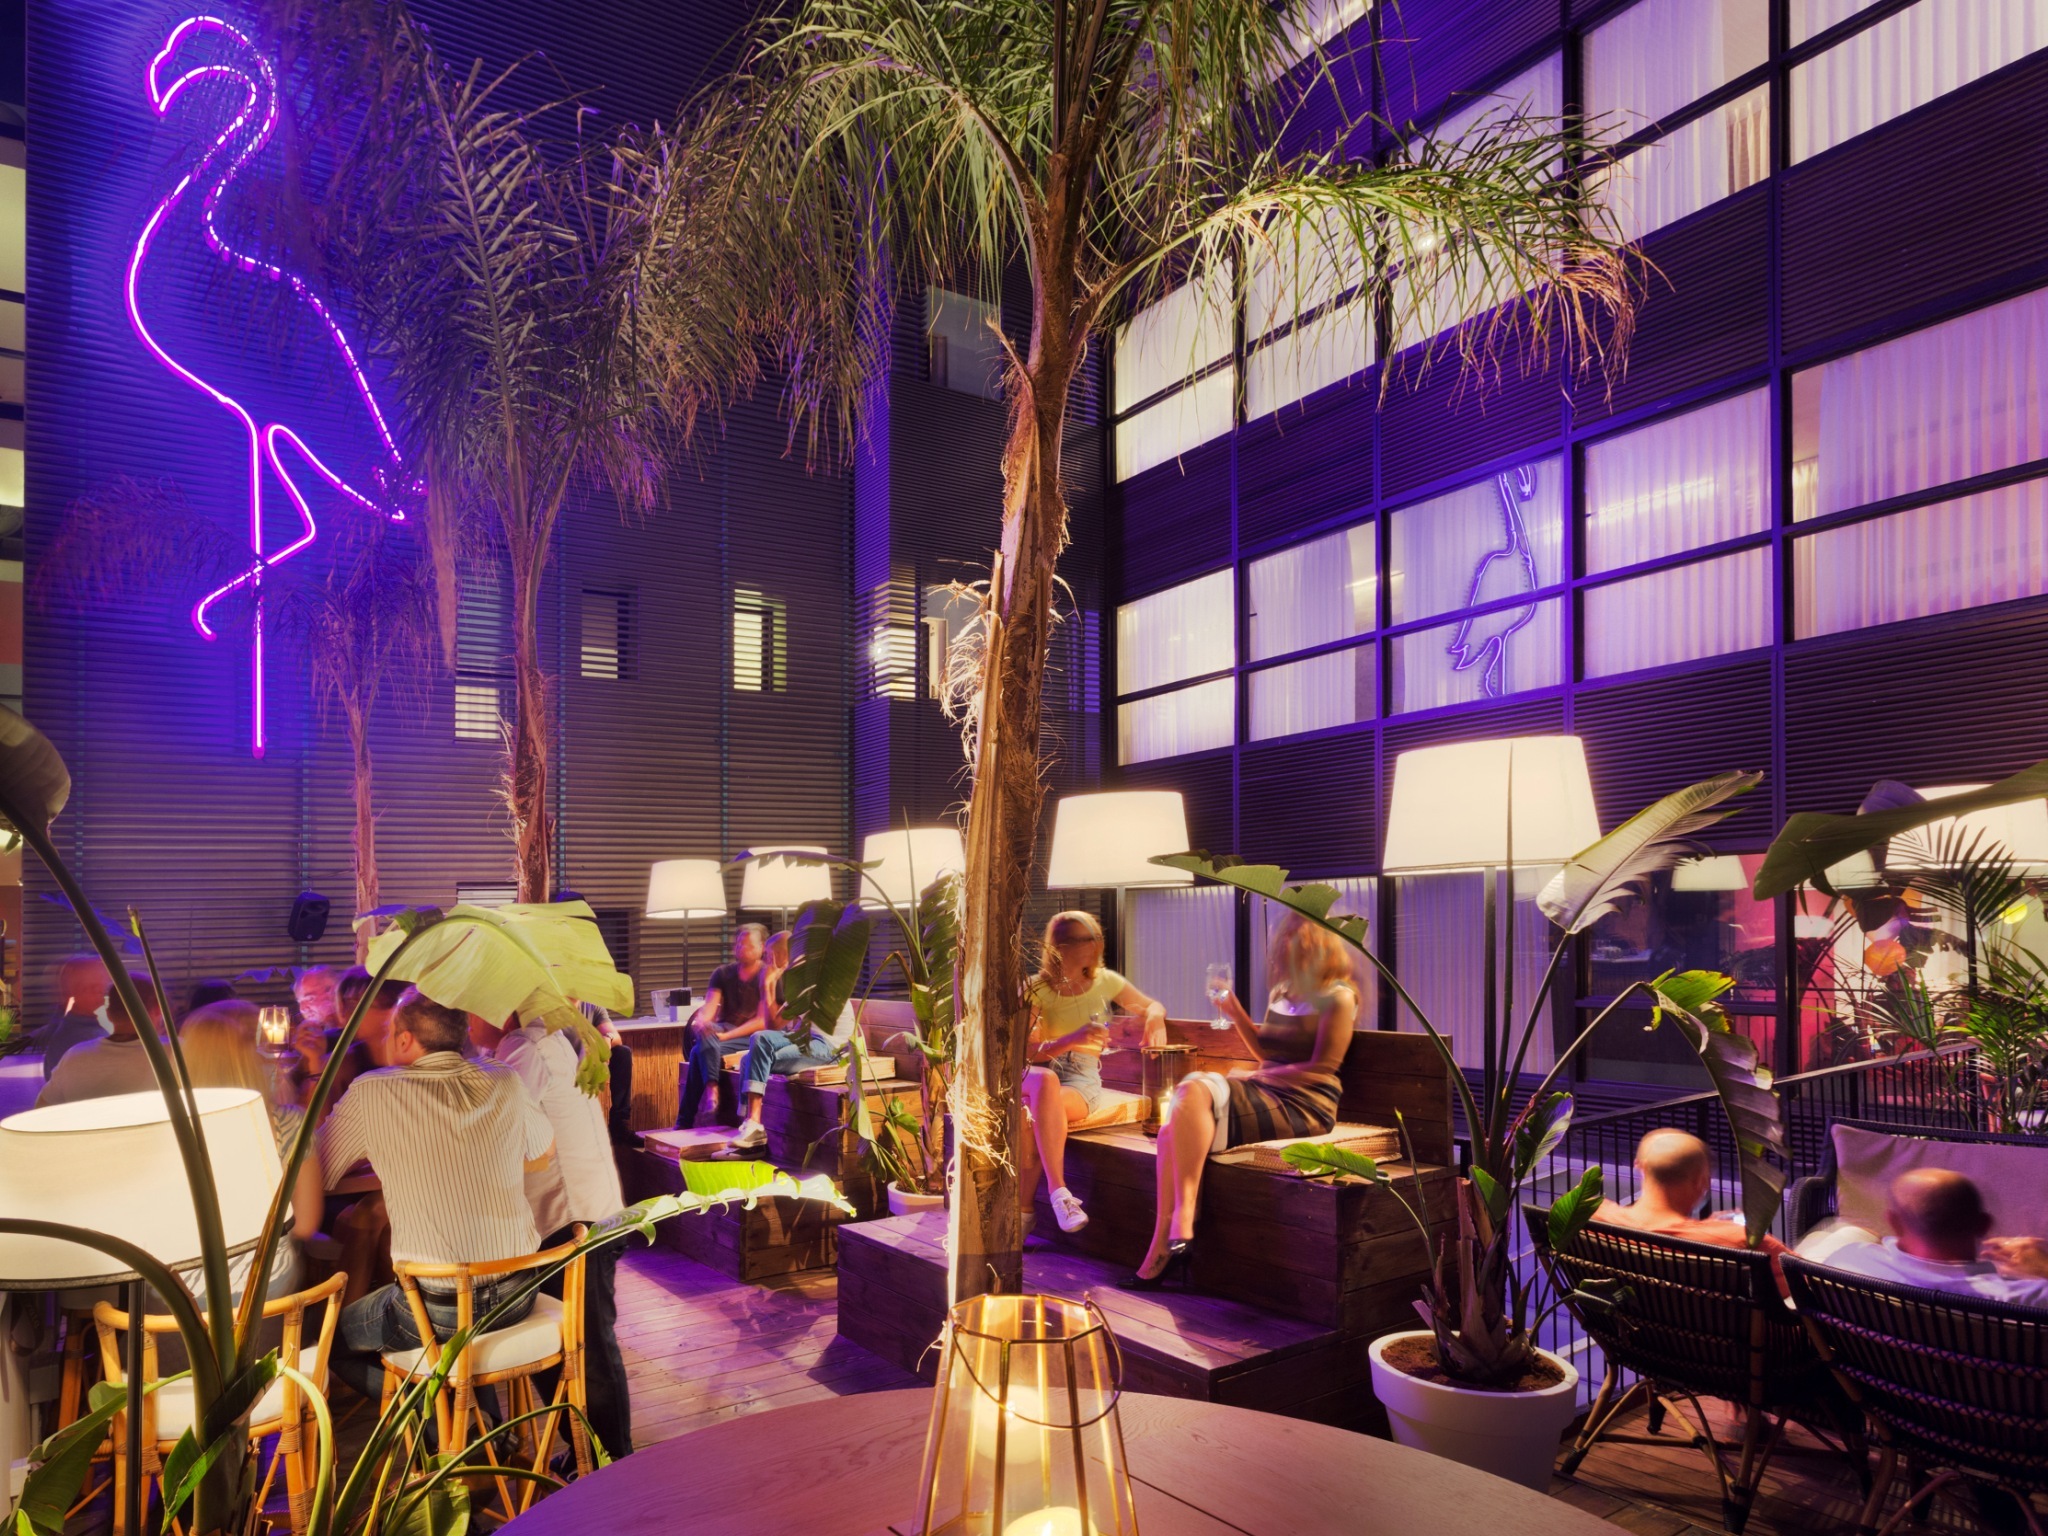 Flamingo Bar | Bars in Tel Aviv City Center, Israel